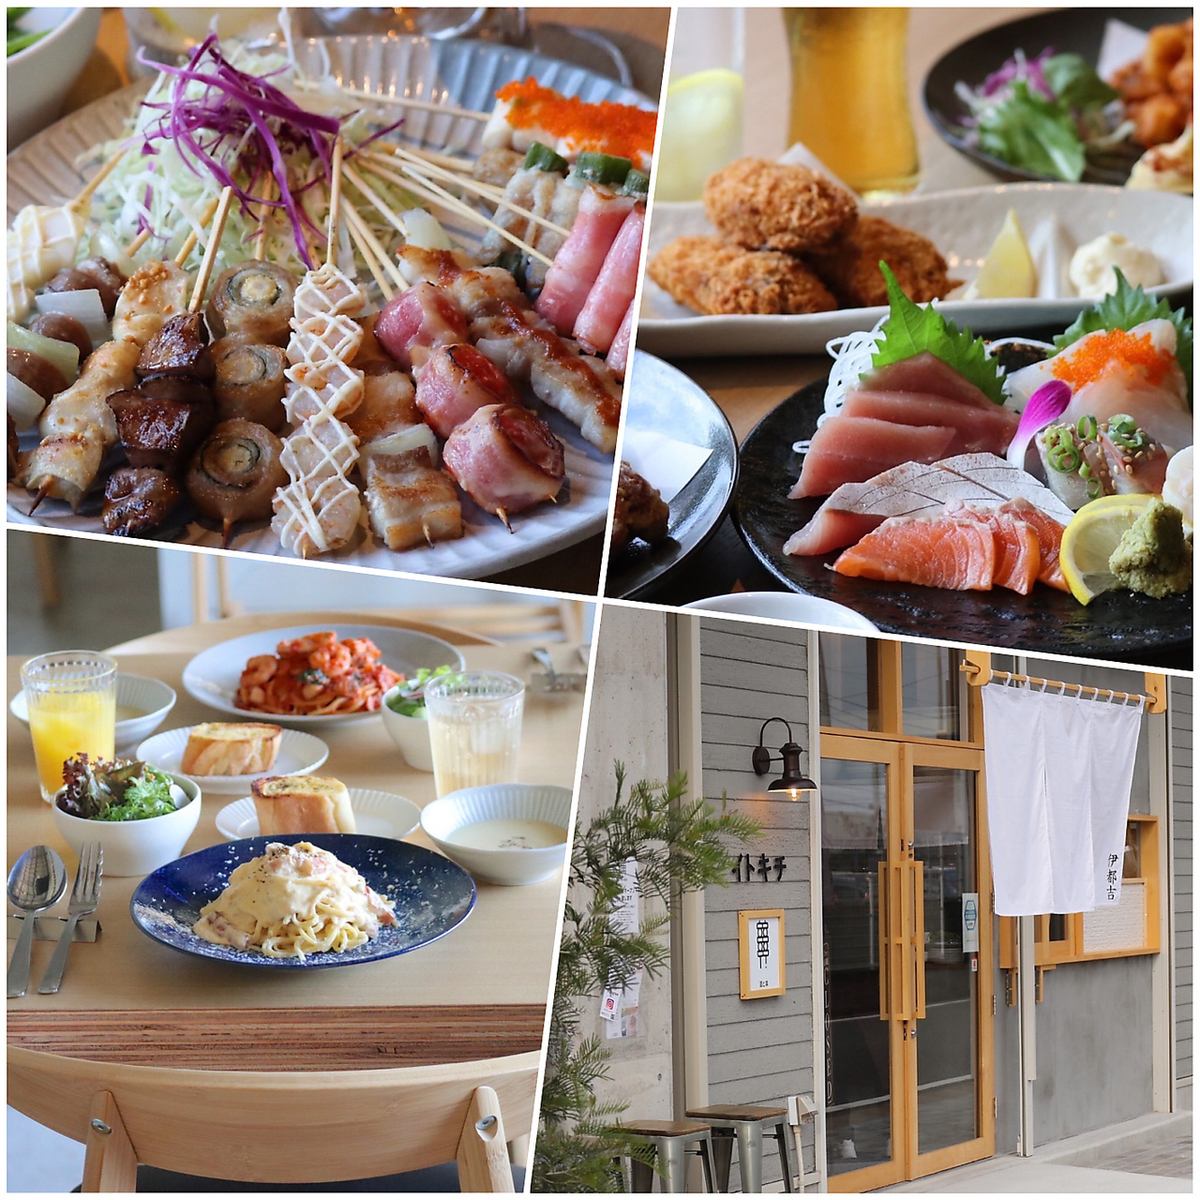 ★ Lunch "Raw Pasta Itokichi" / Dinner "Sake and Skew Itokichi" ★